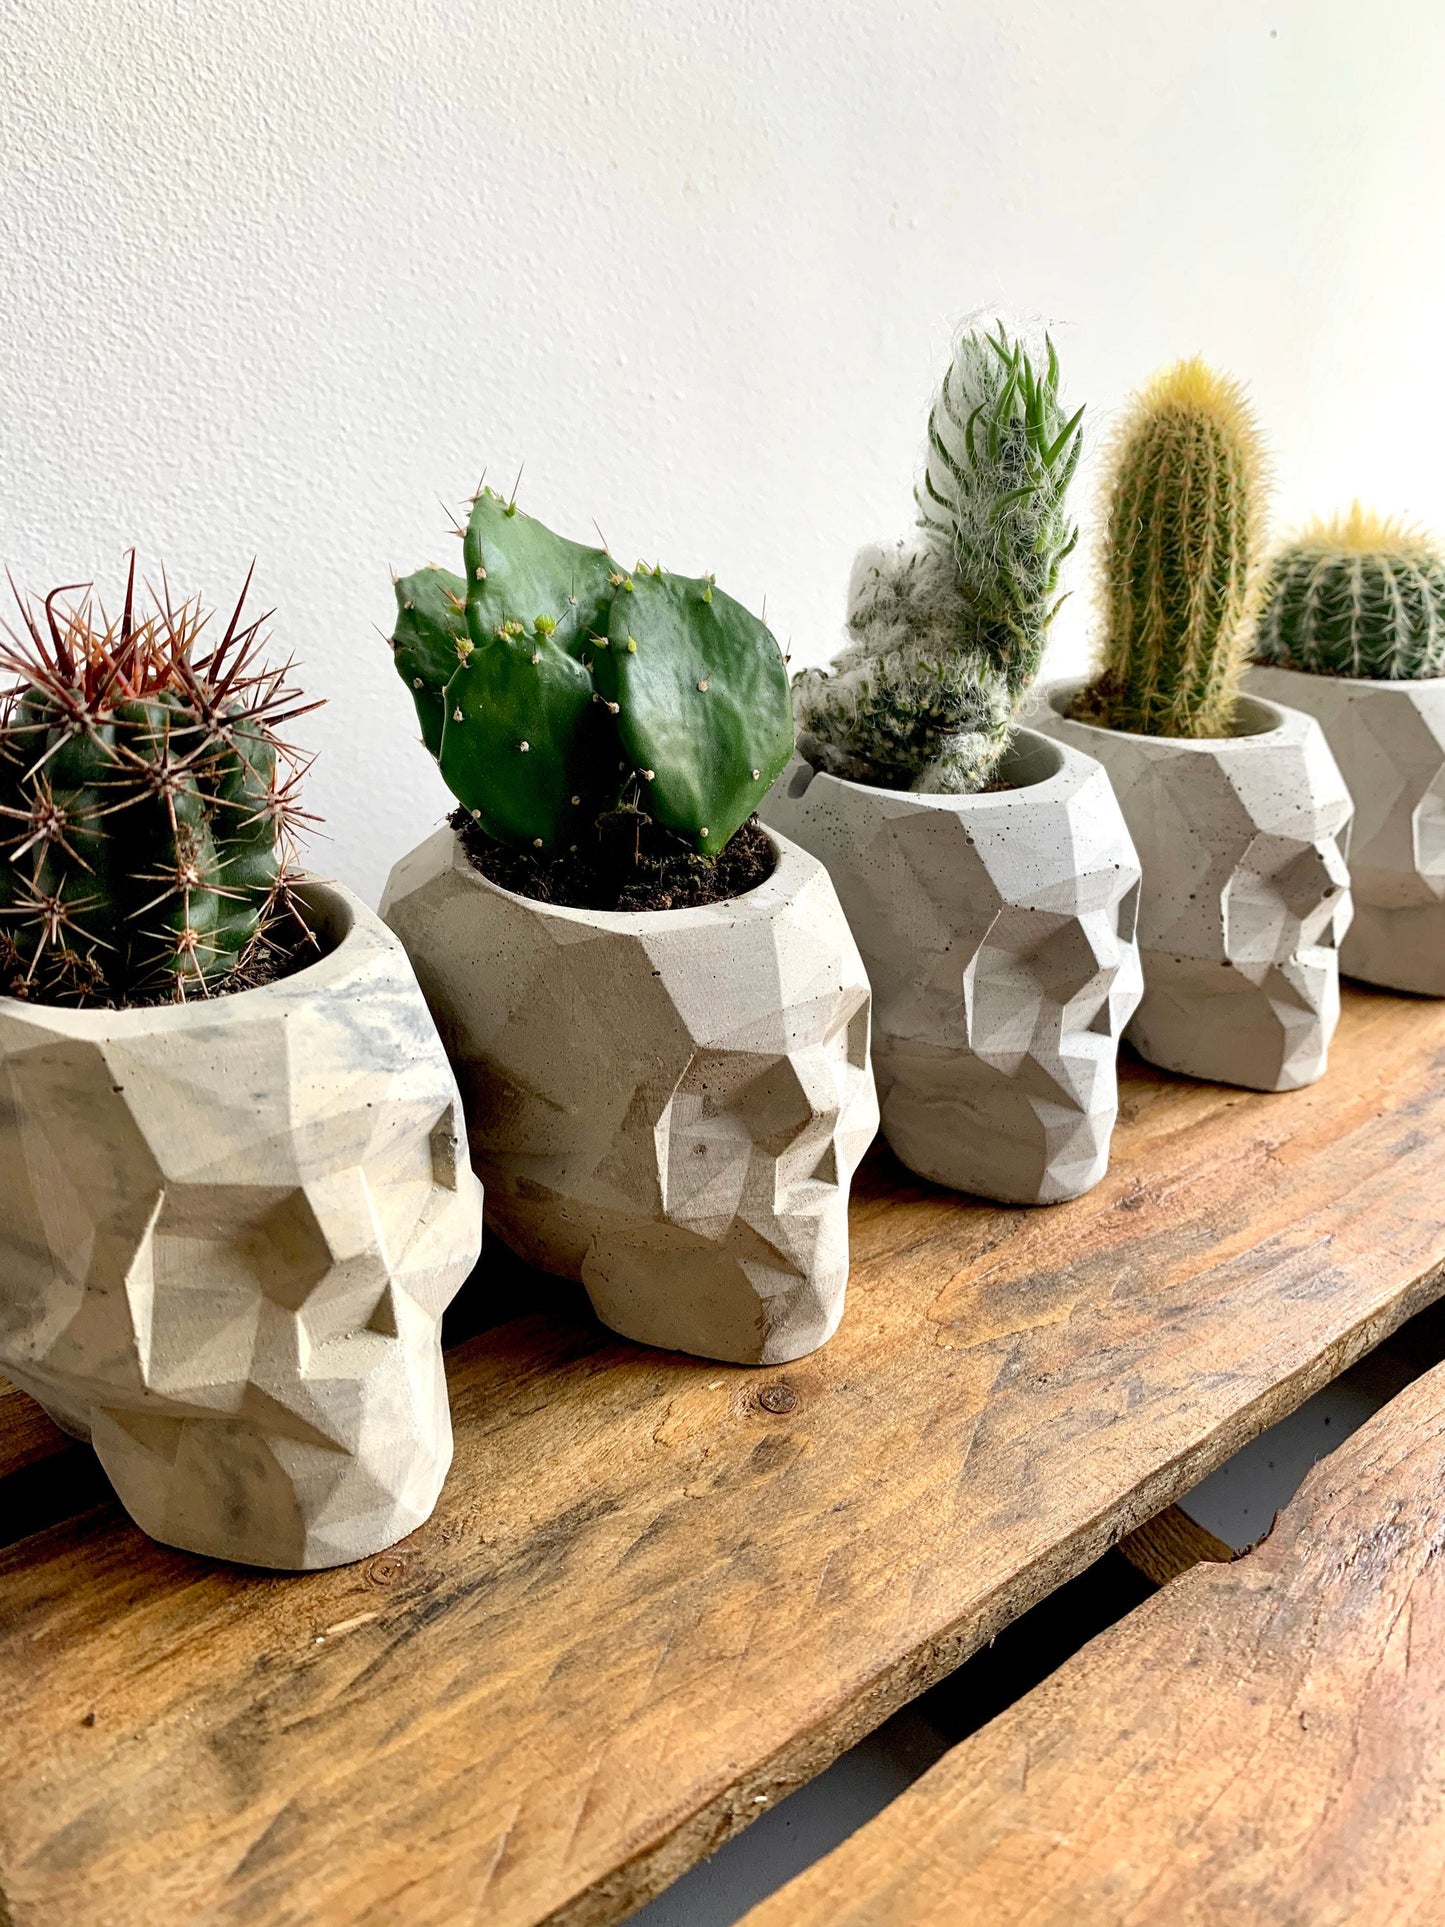 Geometric Skull Planter